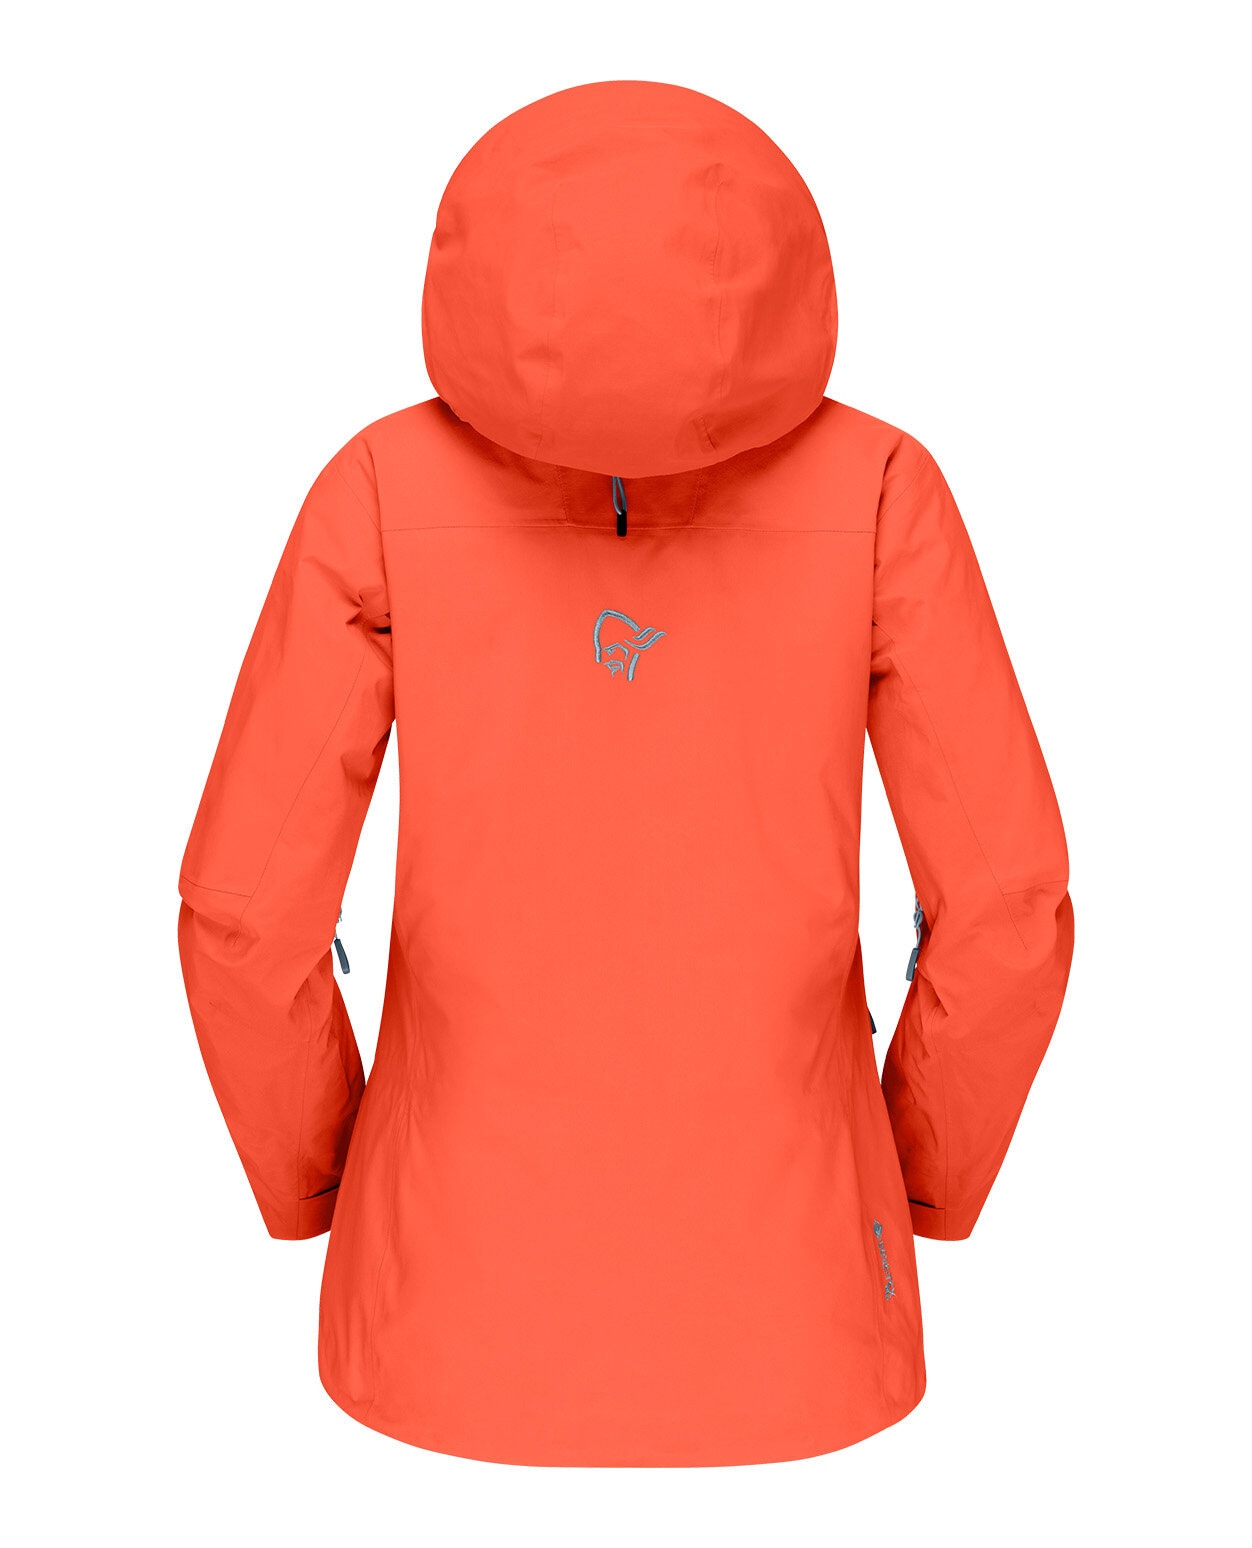 Norröna W Lofoten Gore-Tex Pro Jacket Orange Alert